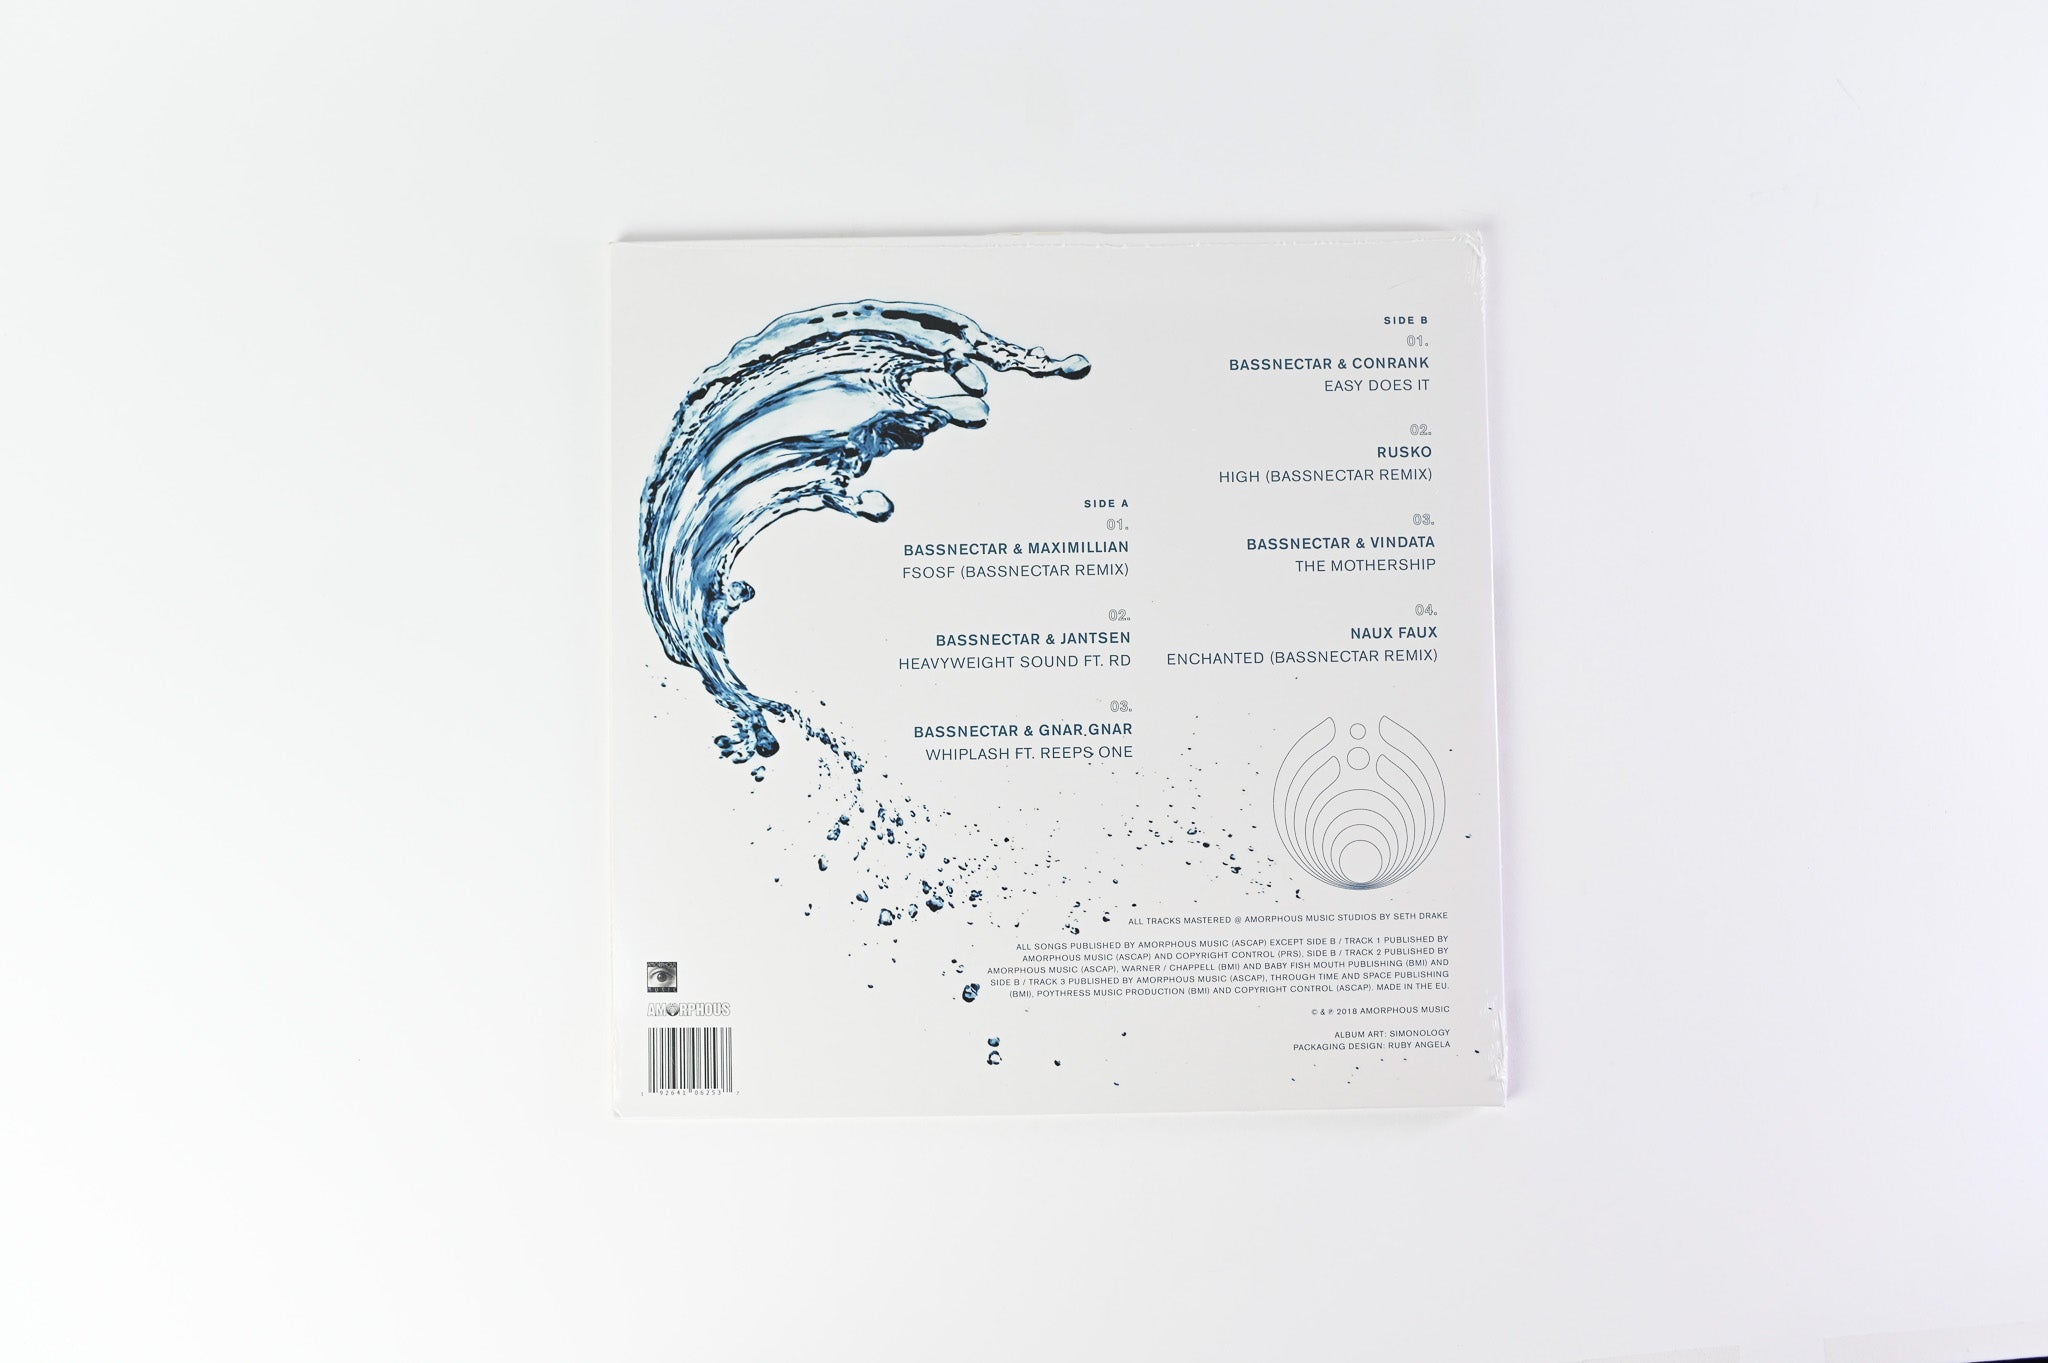 Bassnectar - Reflective - Part 3 on Amorphous Music Ltd Blue Vinyl Sealed